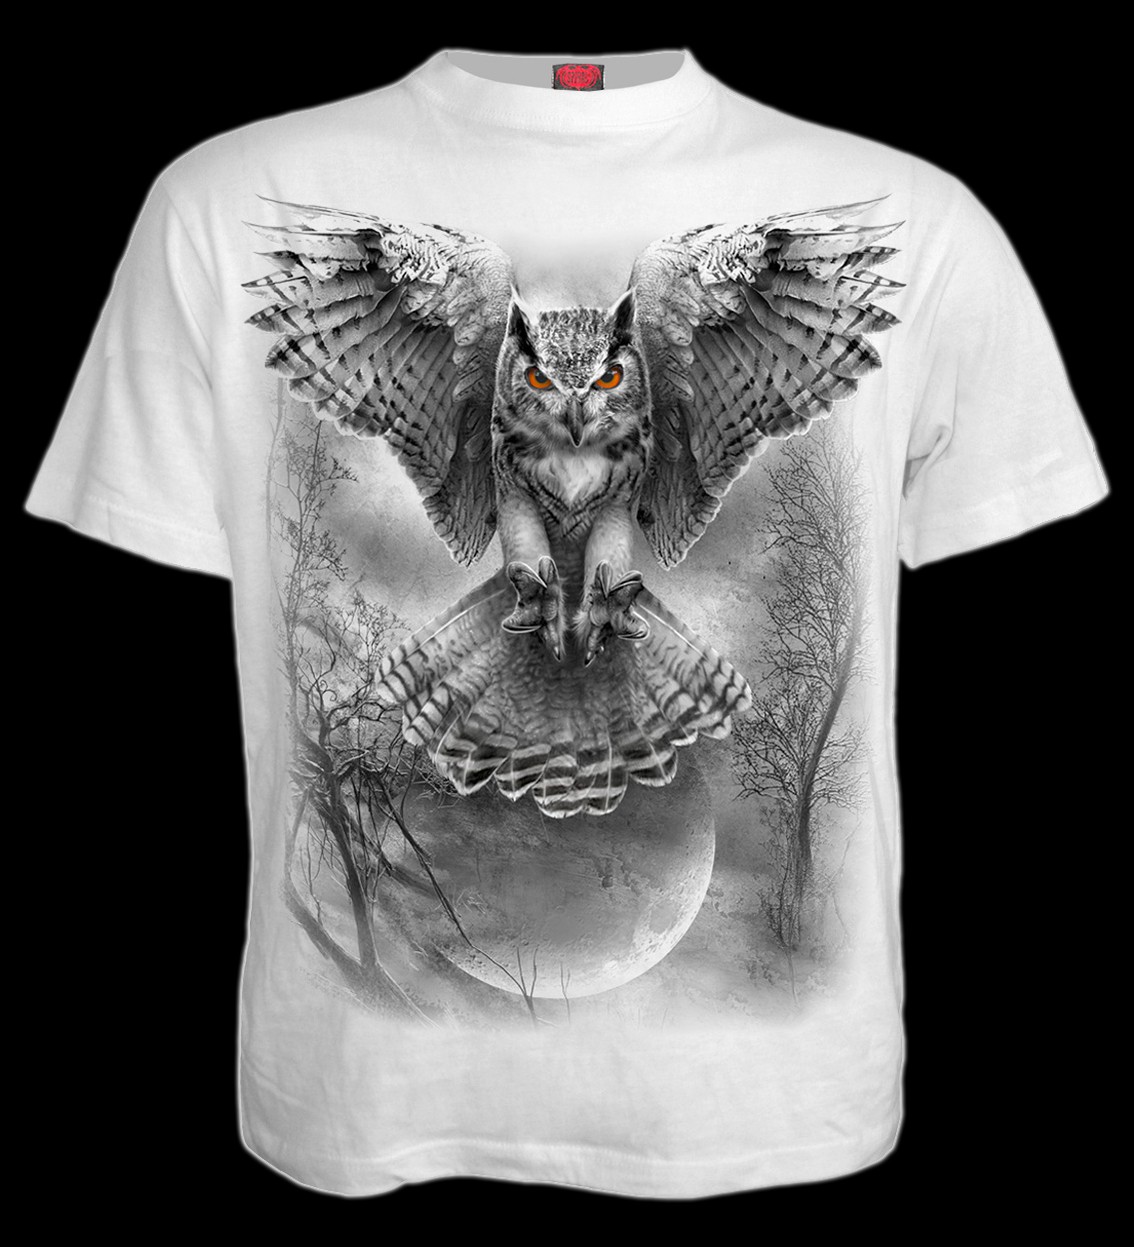 Wings Of Wisdom - Owl T-Shirt White